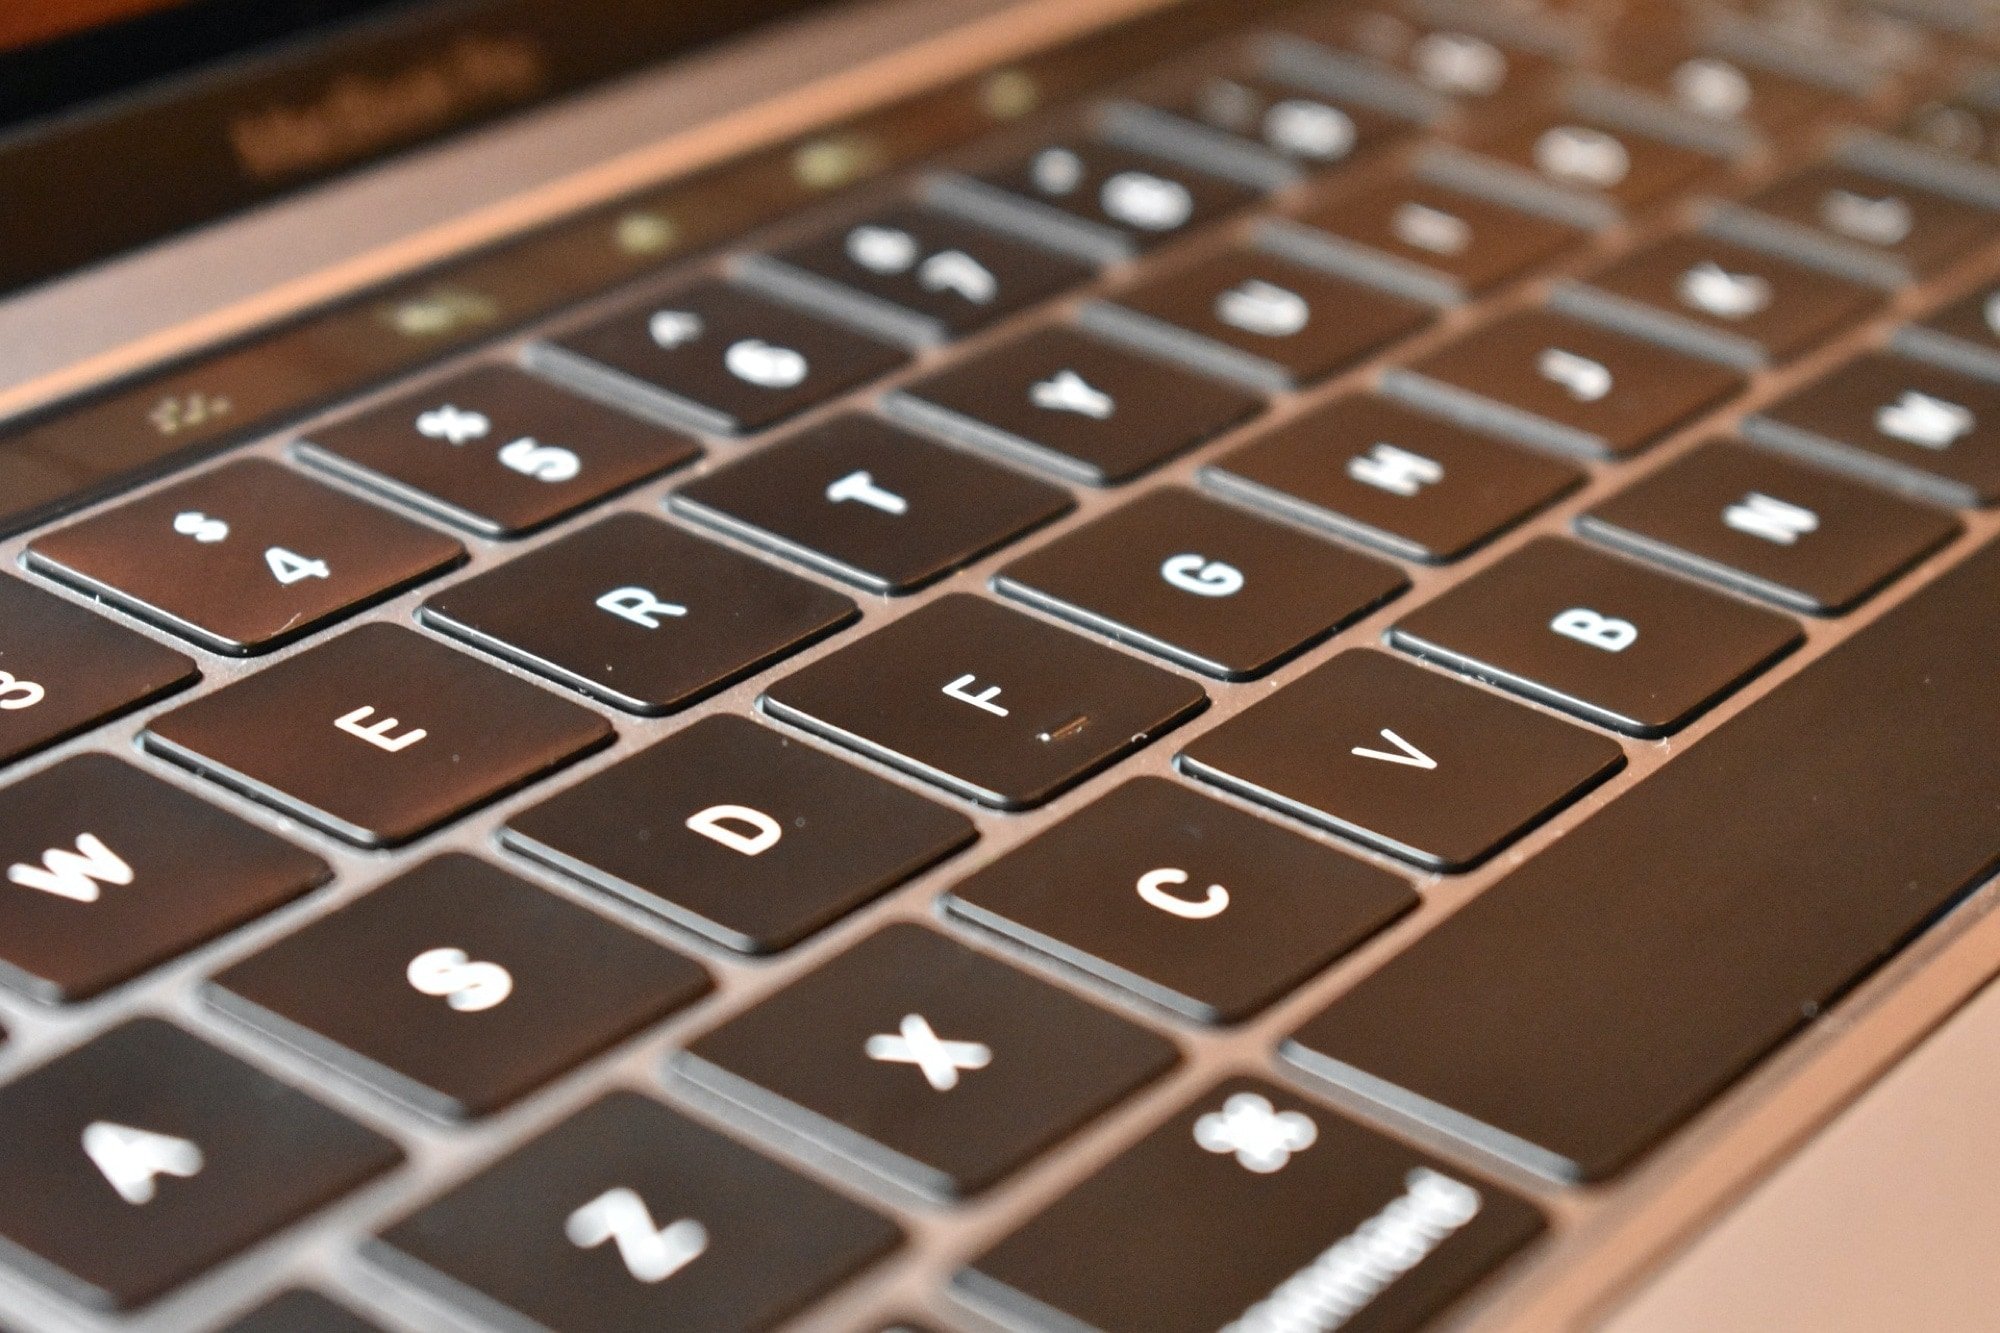 MacBook-keyboard-PowerPoint-keyboard-shortcuts.jpg